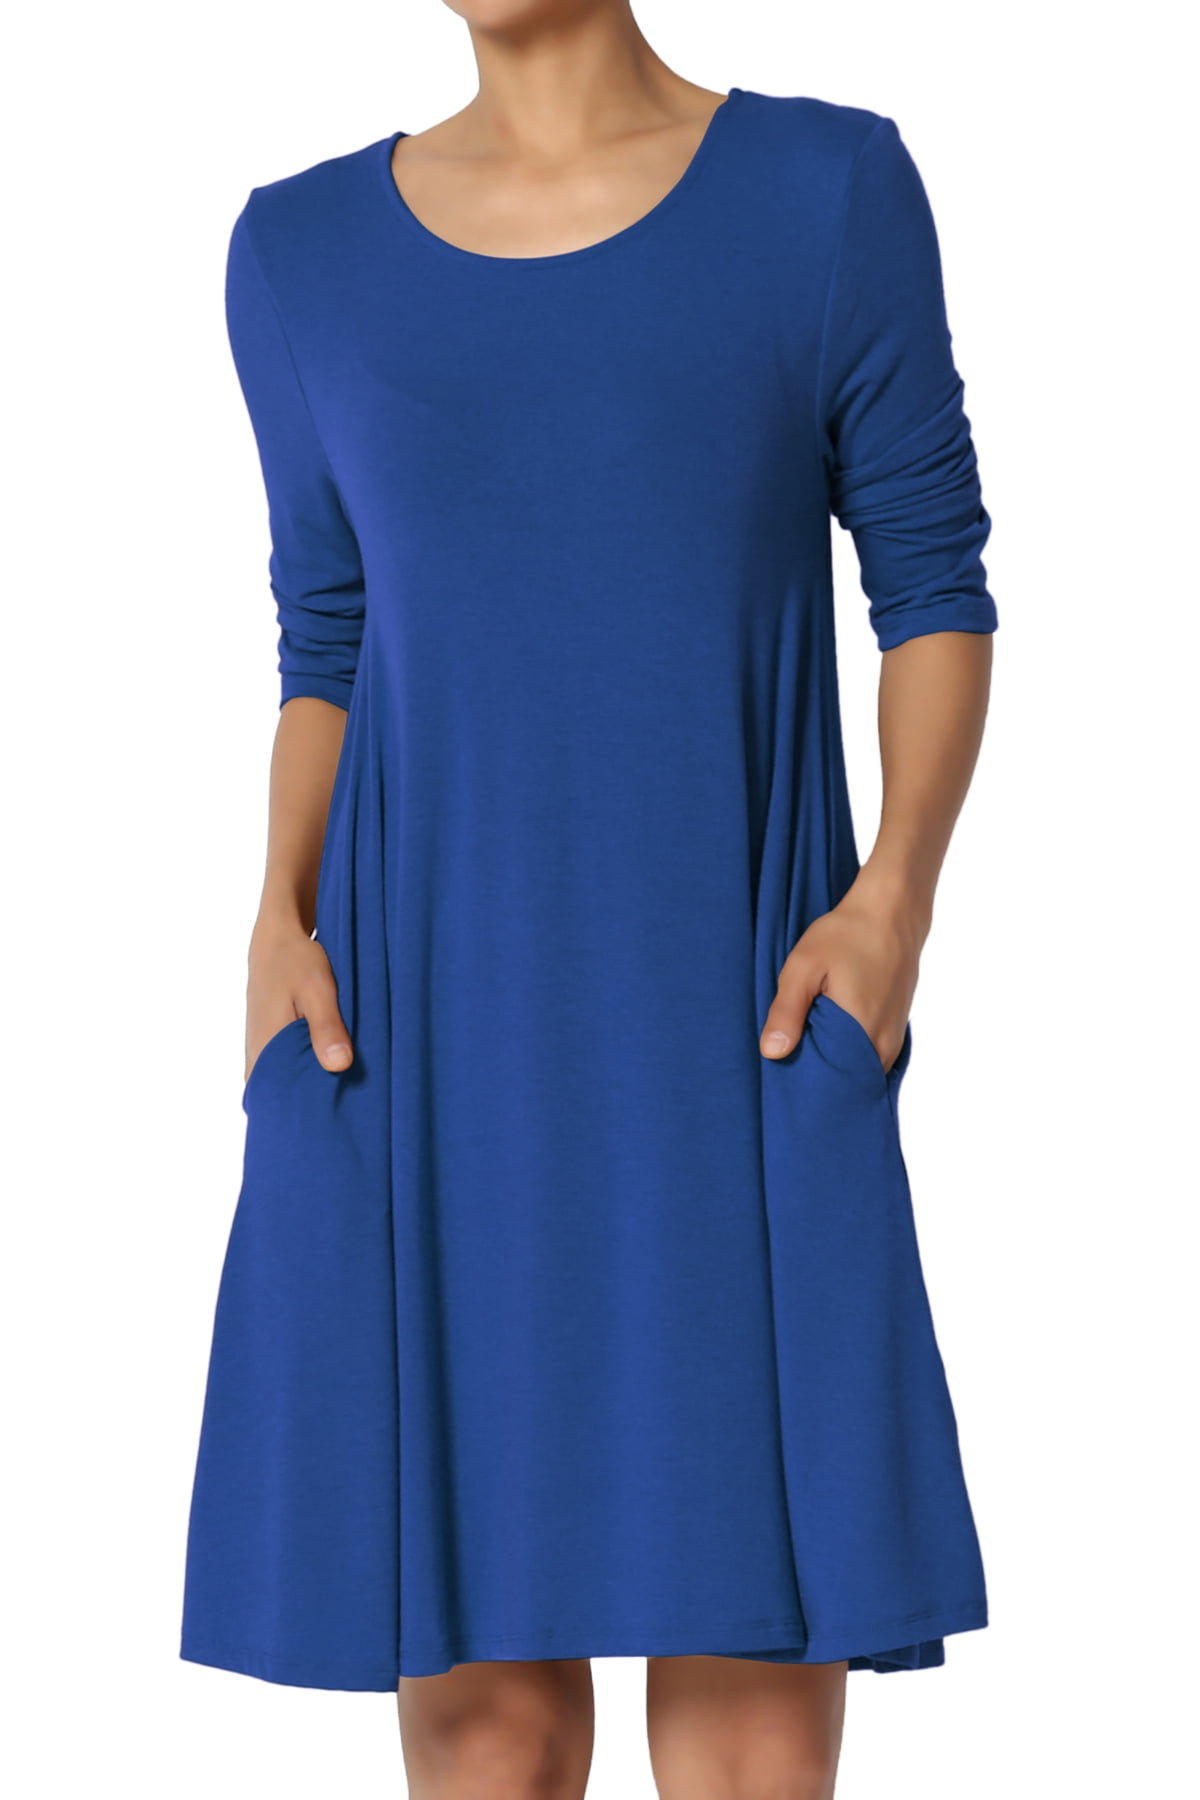 TheMogan Women's S~3XL Basic 3/4 Sleeve Swing Flared Tunic Dress Pocket ...